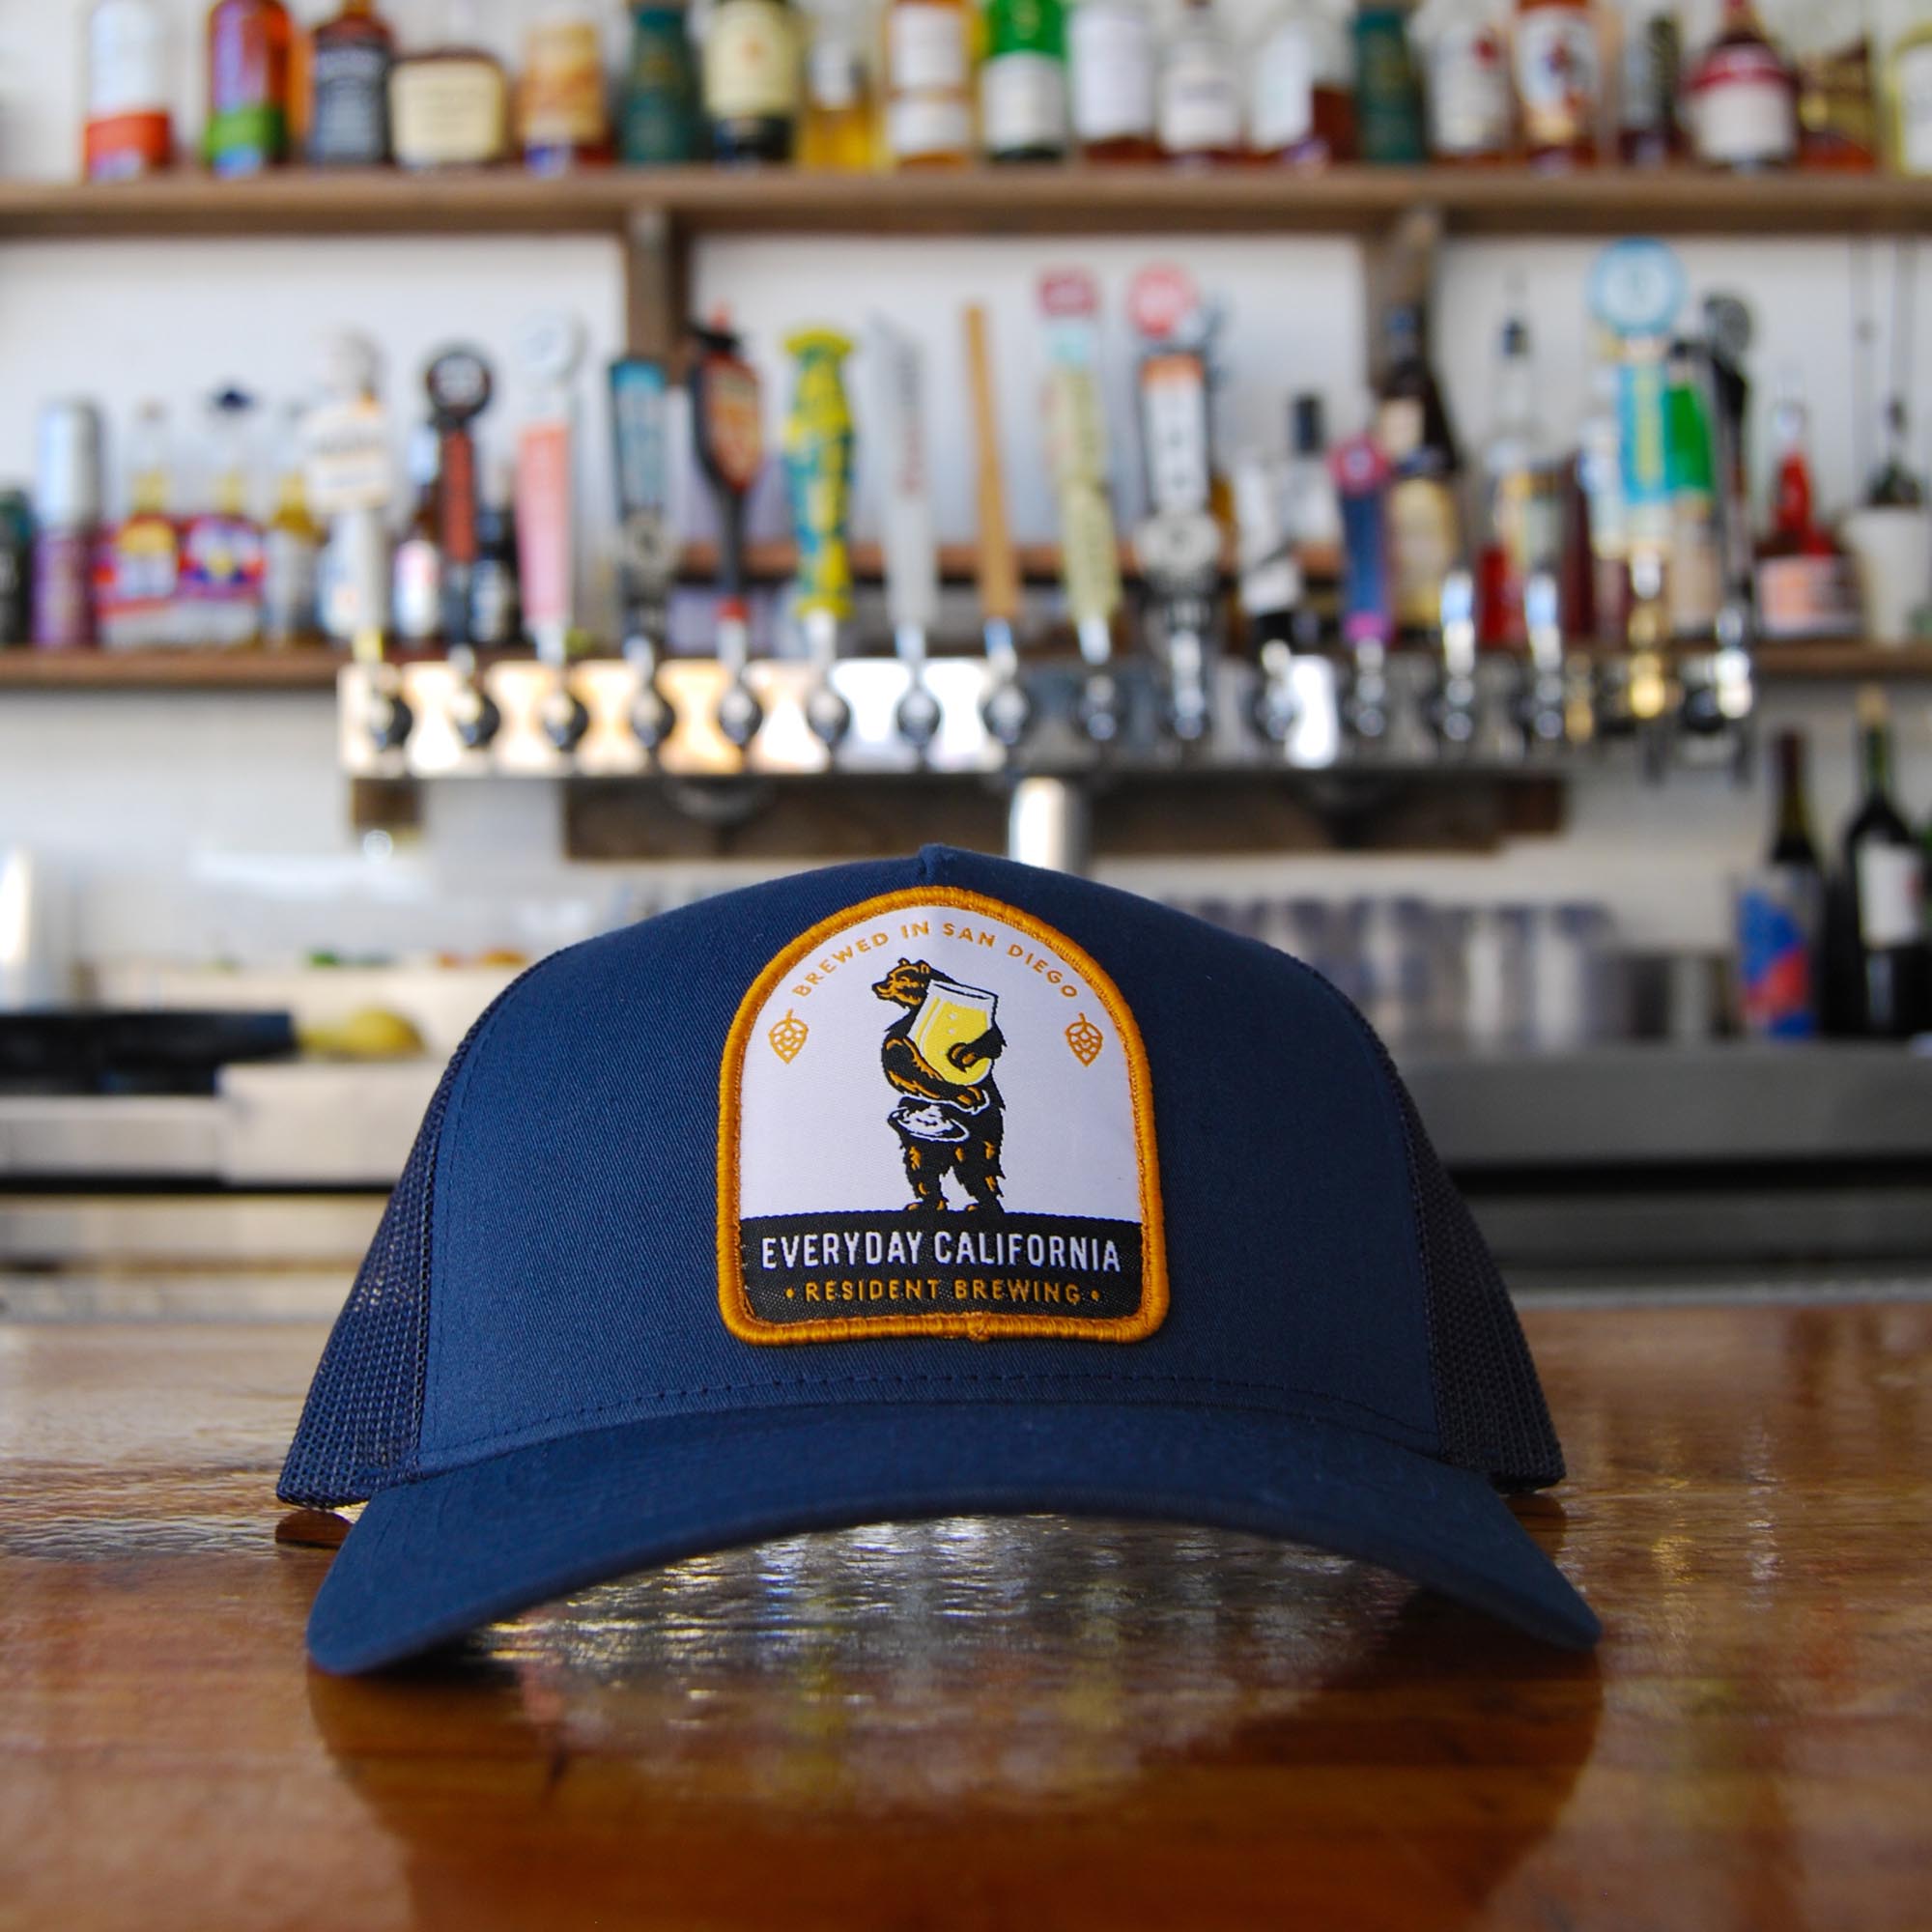 Everyday California Brewski Trucker Hat in Navy on bar